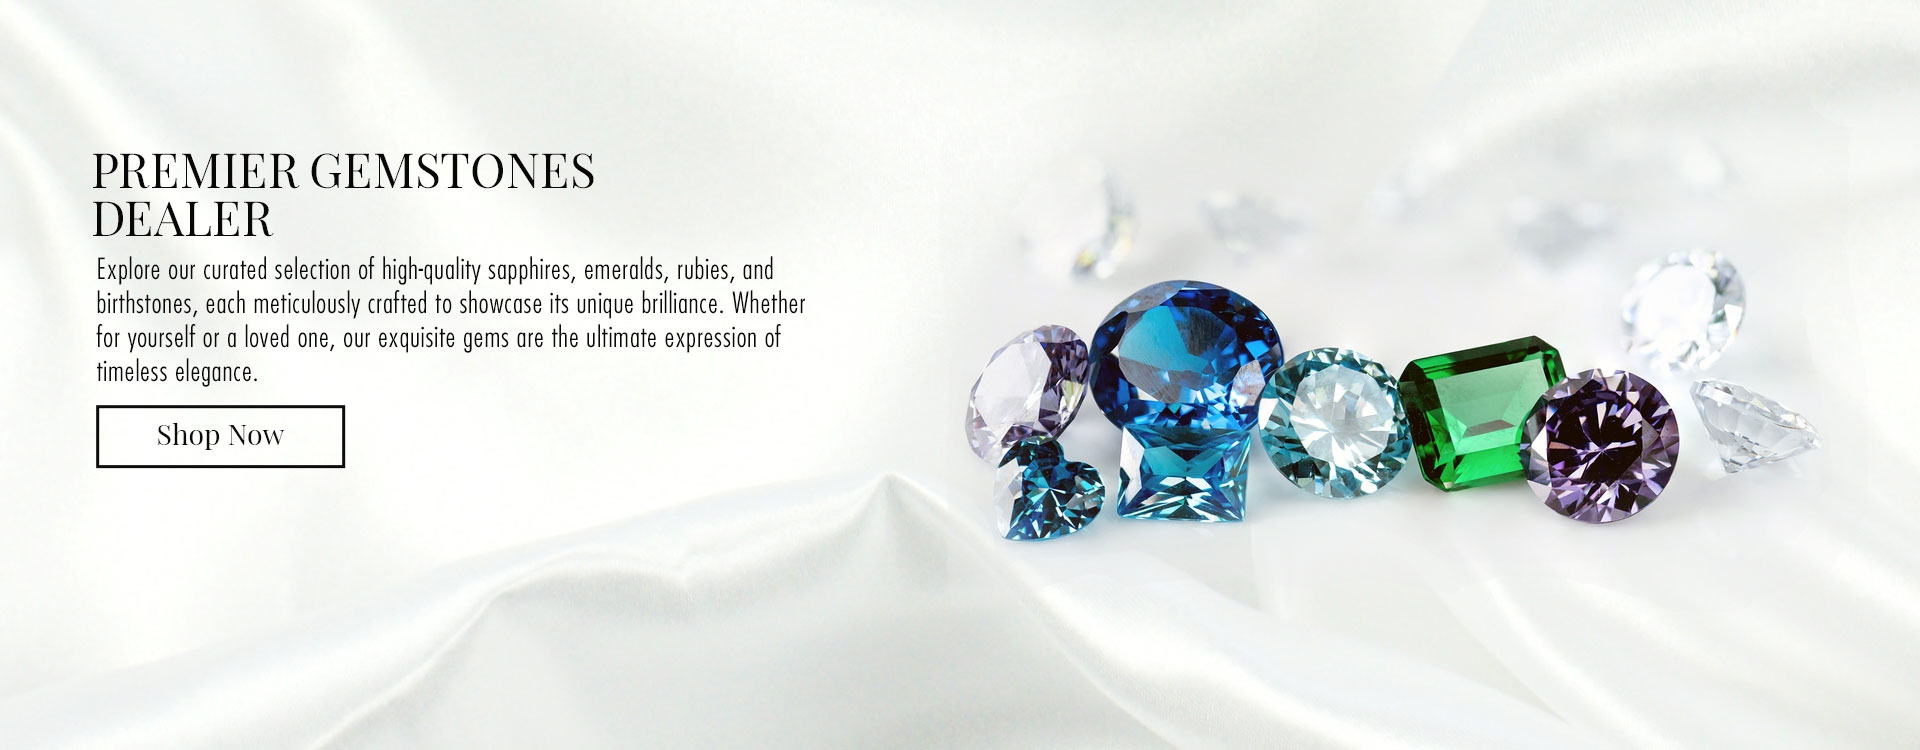 osha jewels gemstones banner